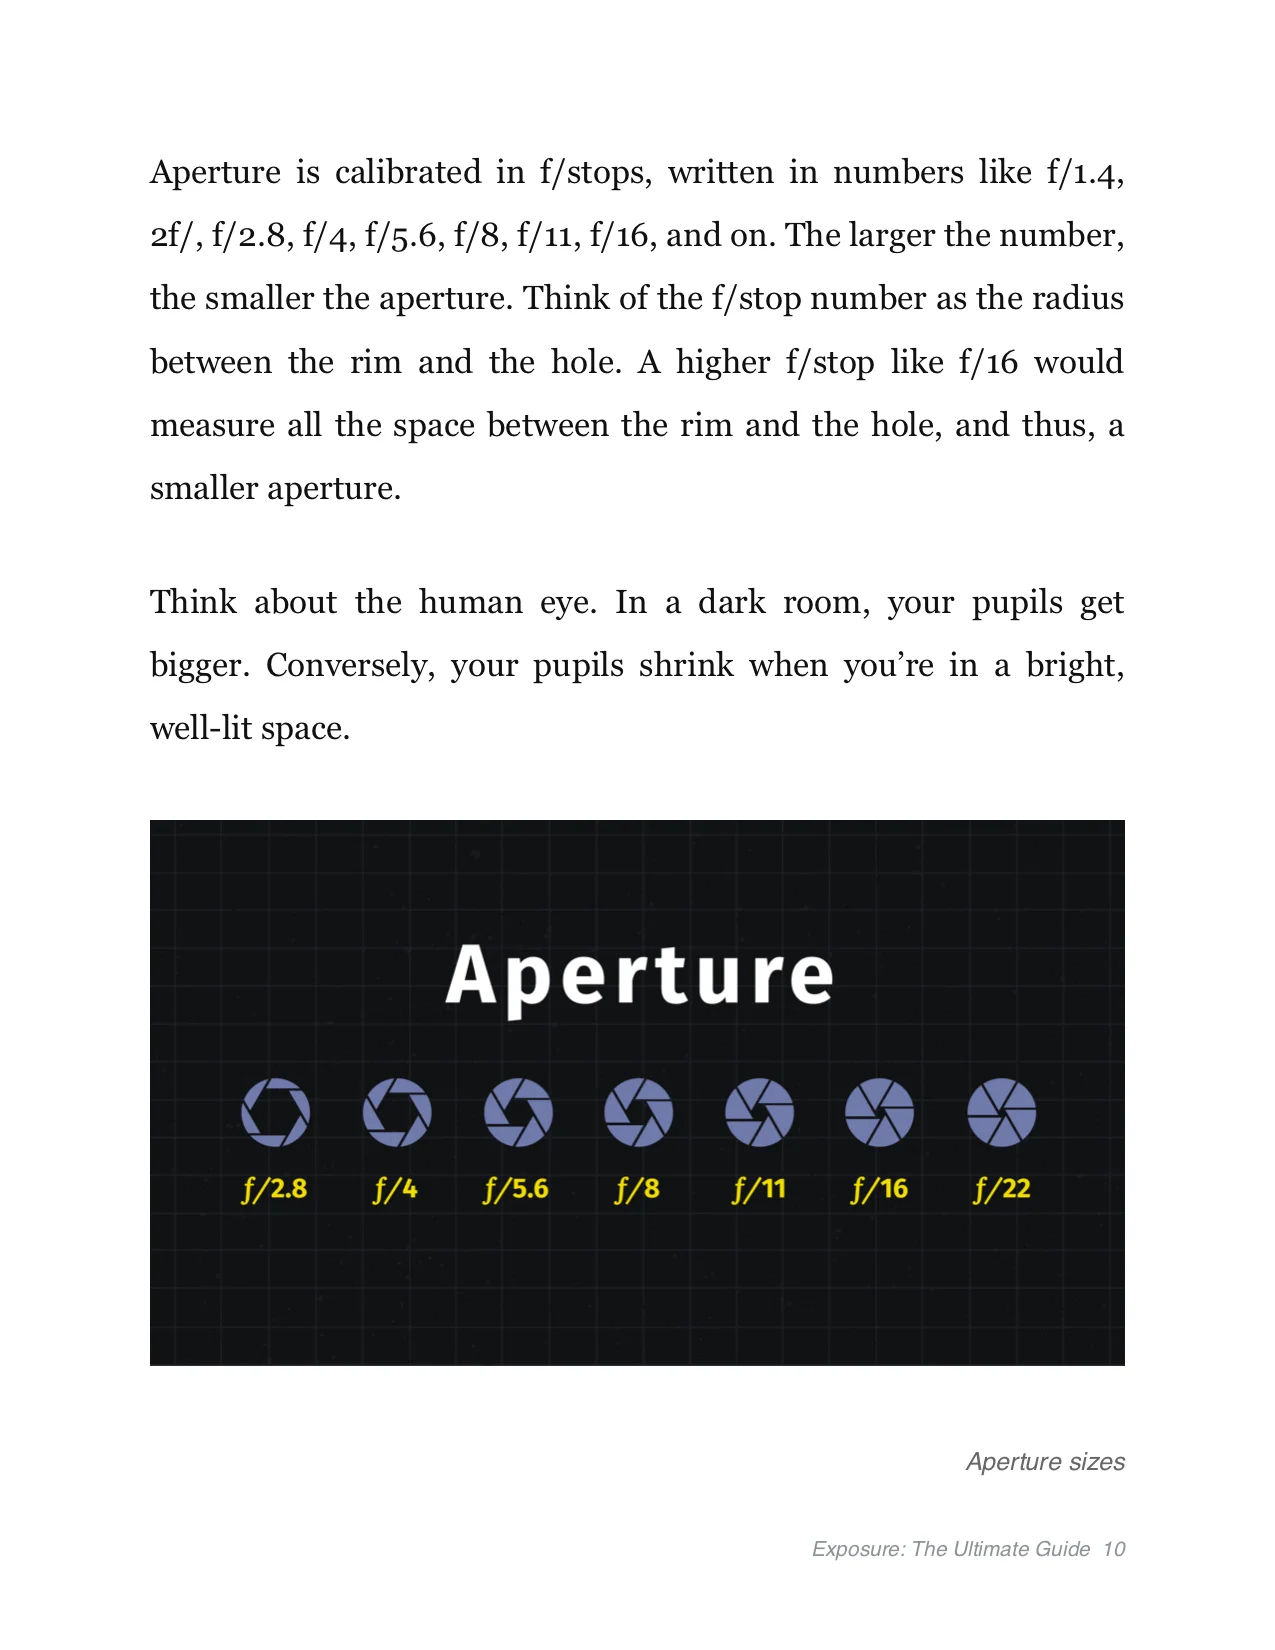 Exposure Triangle Ebook - The Ultimate Guide - Aperture Openings